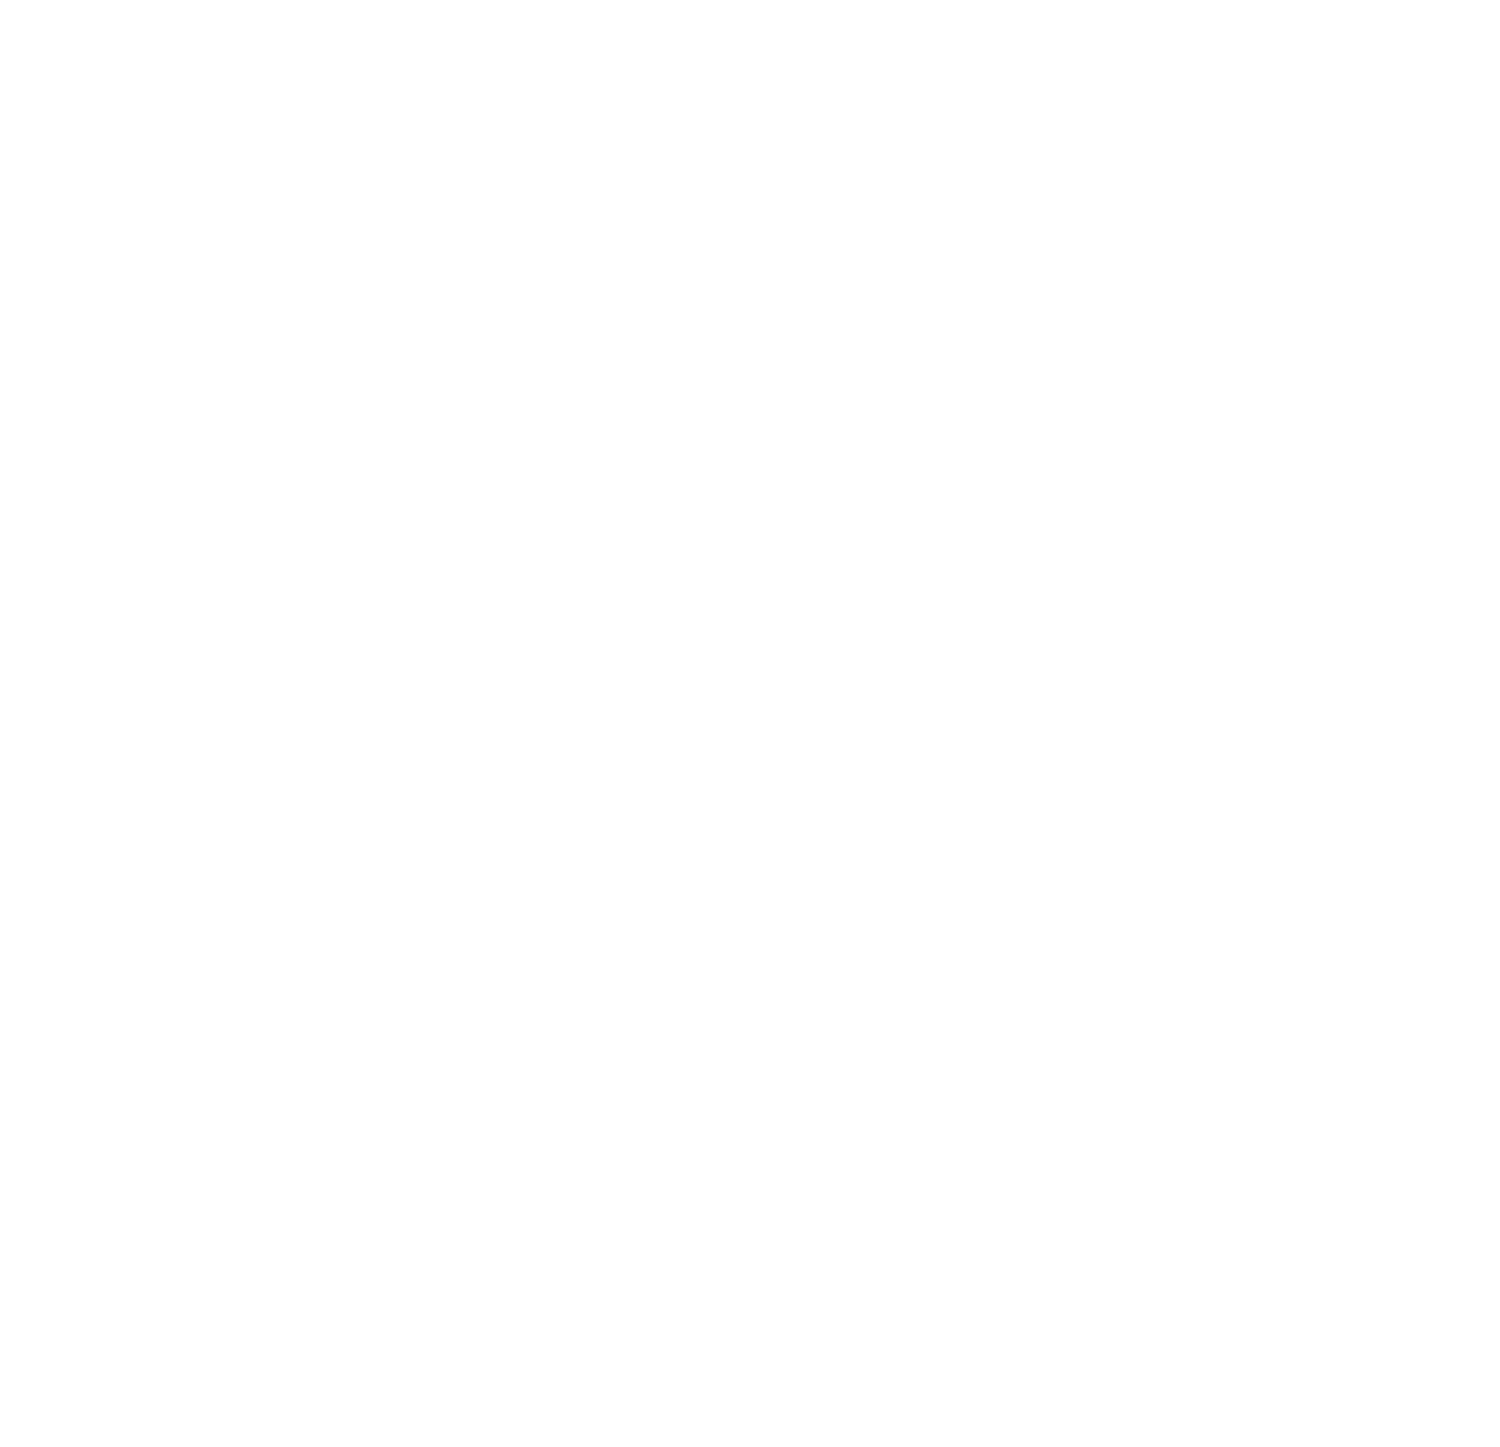 House Cat Marketing